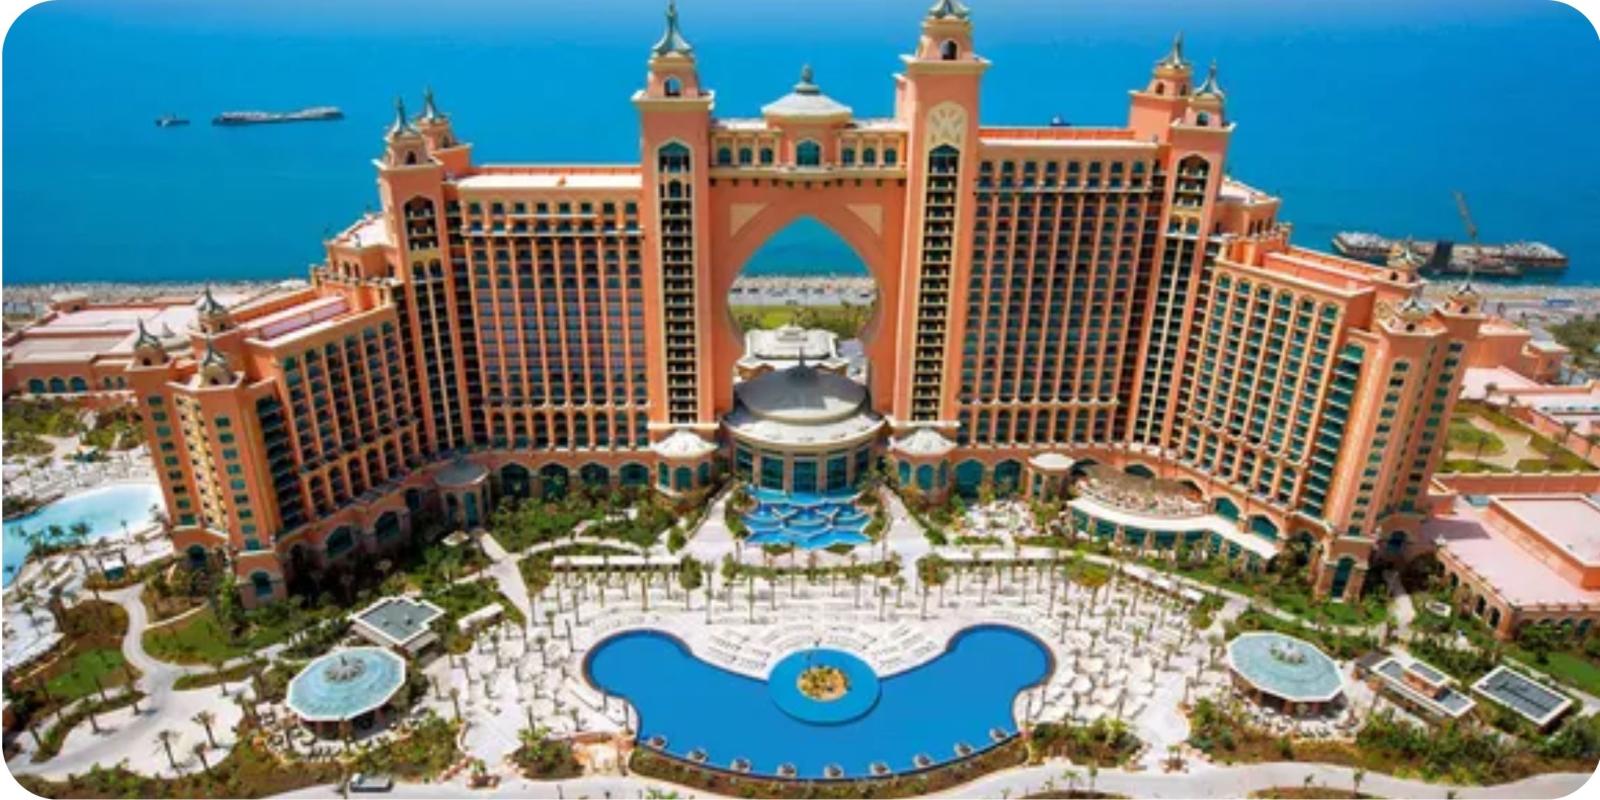 Hotel Atlantis The Palm, Dubai - trivago.be